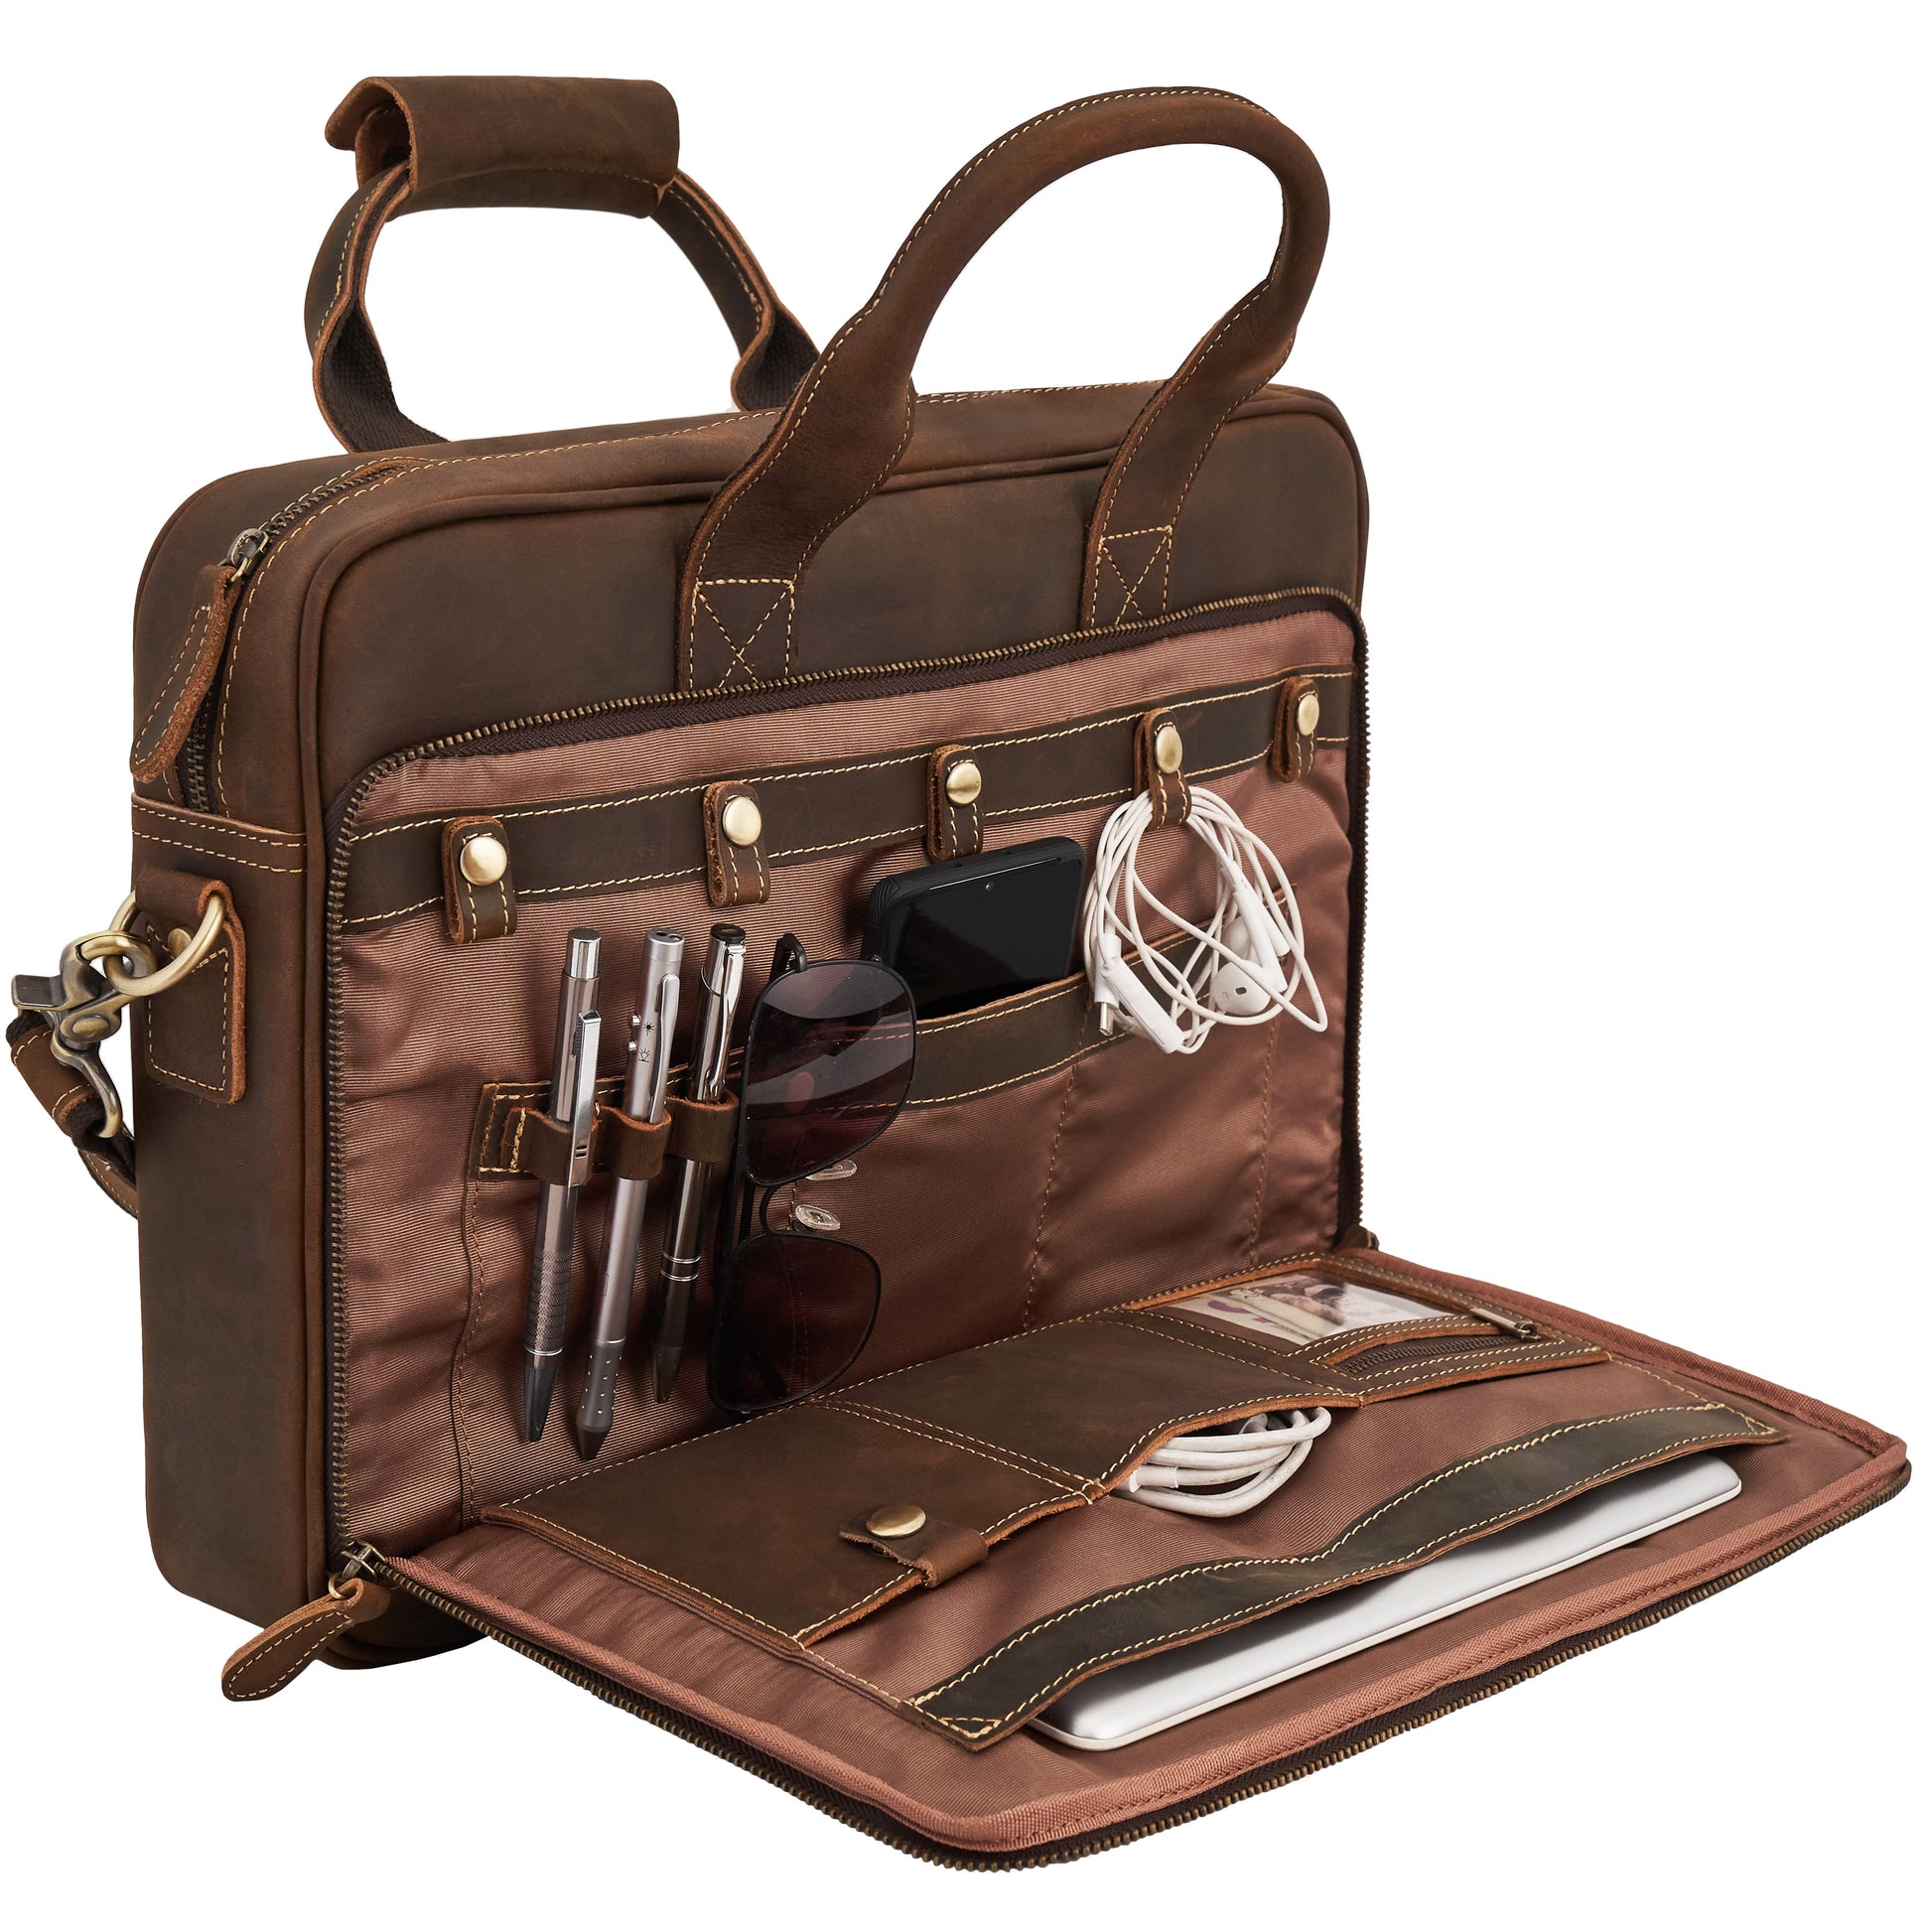 LV 100% Genuine Leather 17'' Laptop Men's Briefcase Bag, 15.6'' Laptop  Compartment, 22 Liters Capacity, Expandable Features